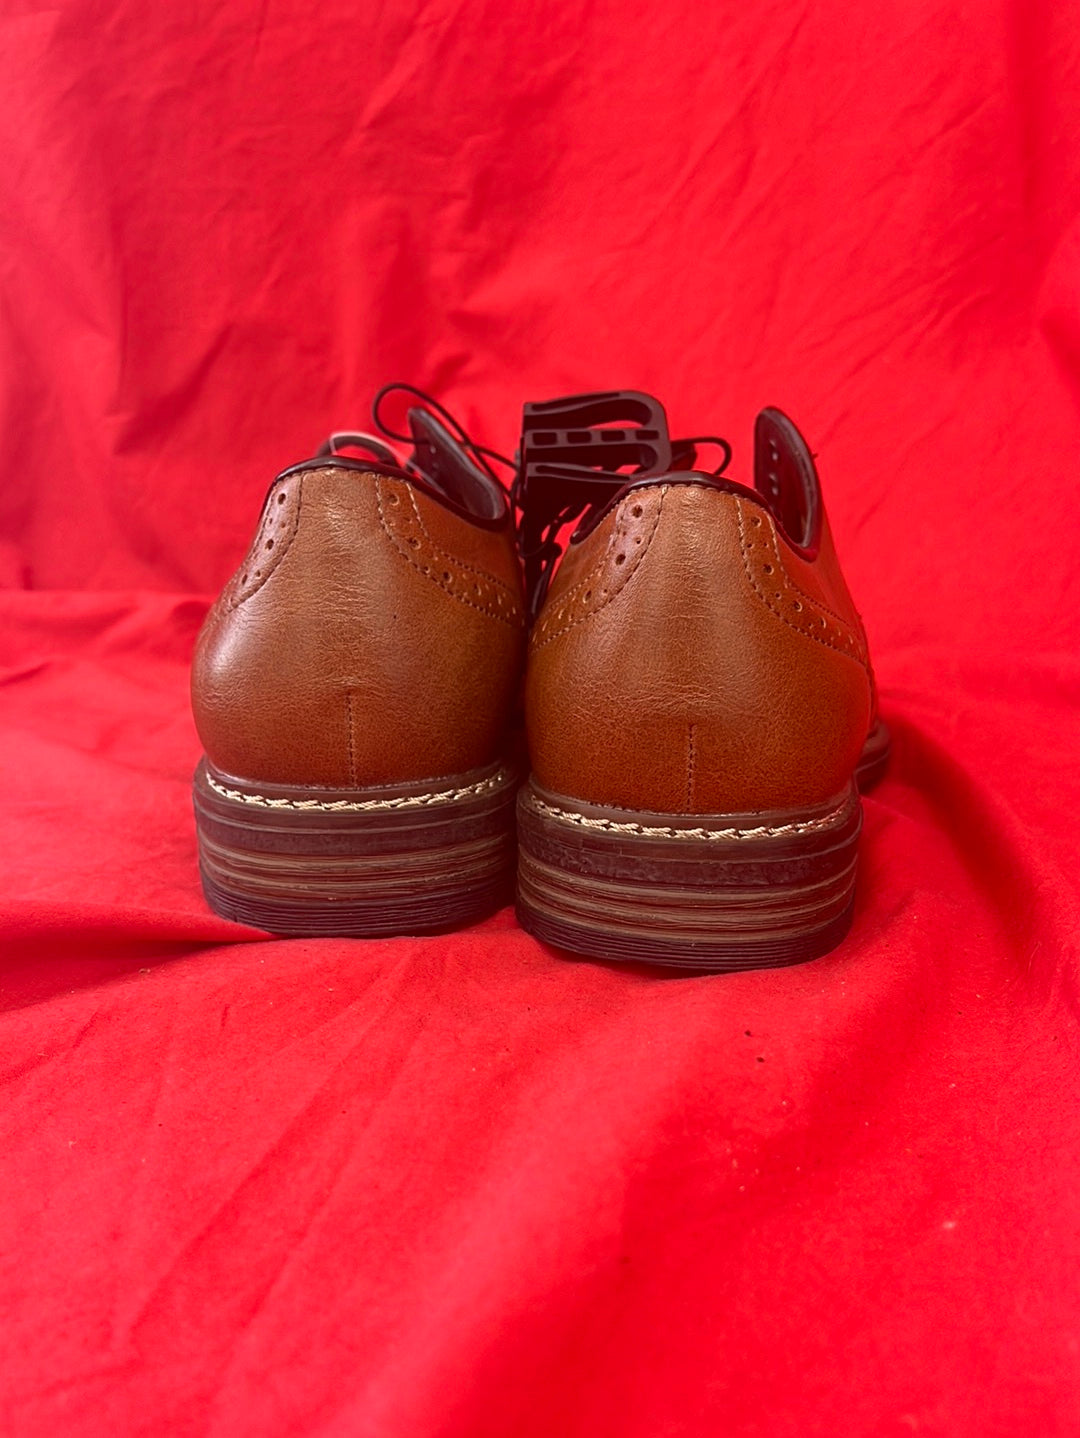 NIP -- GEORGE Men's Dress Shoe Brown Leather Oxford -- Size 8.5